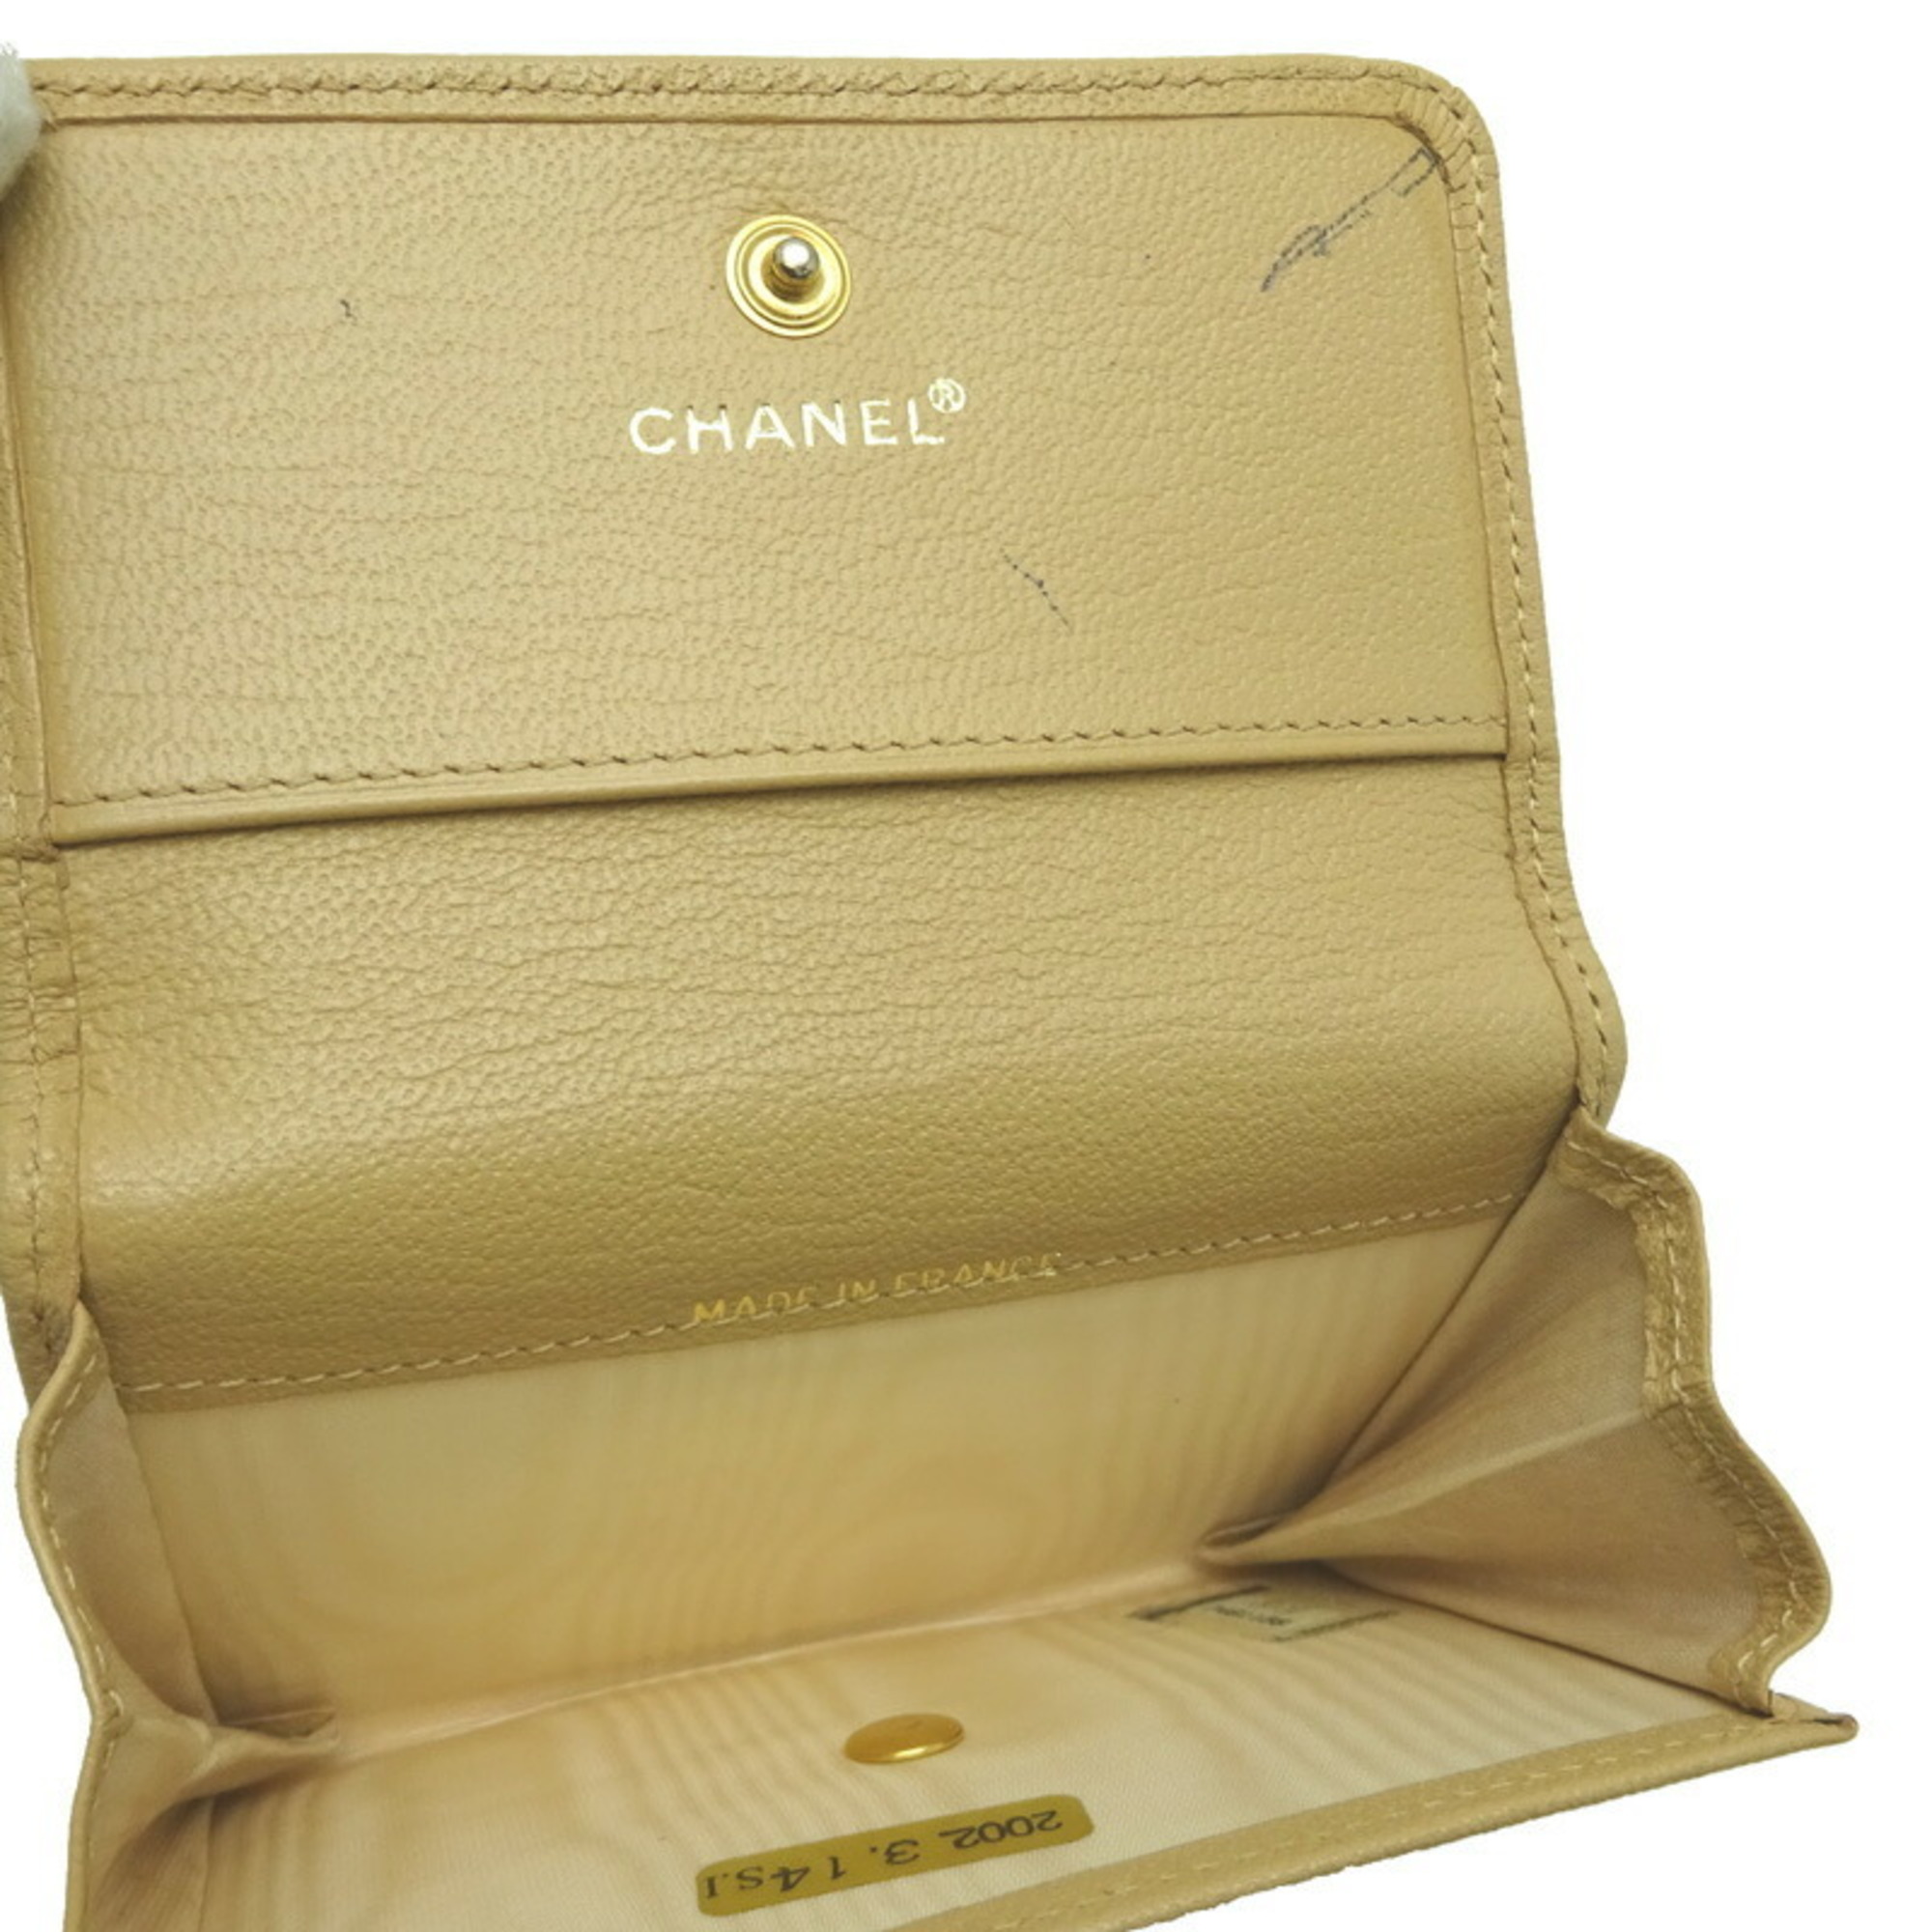 Chanel ladies card case leather beige